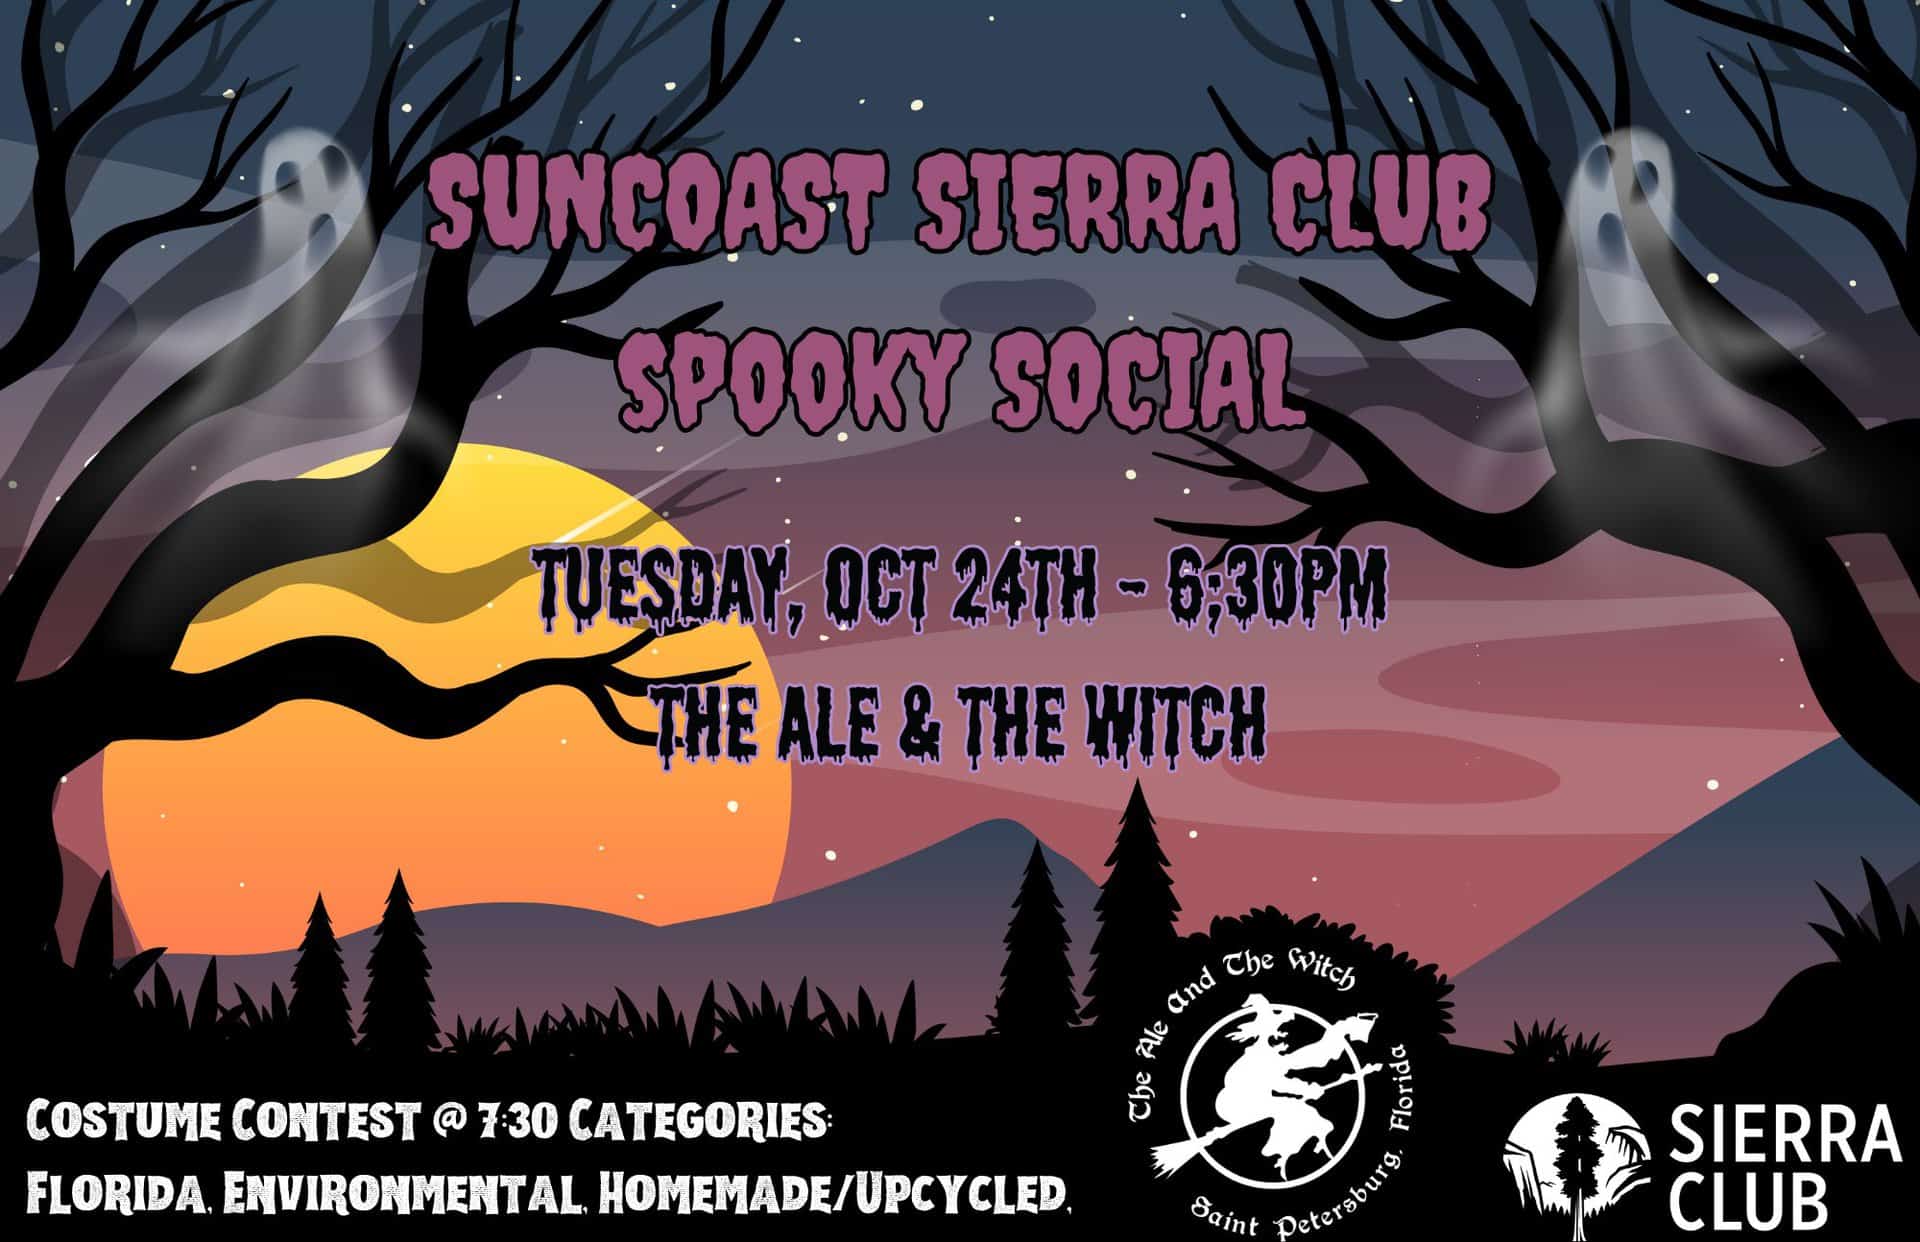 Suncoast Sierra Club Spooky Social